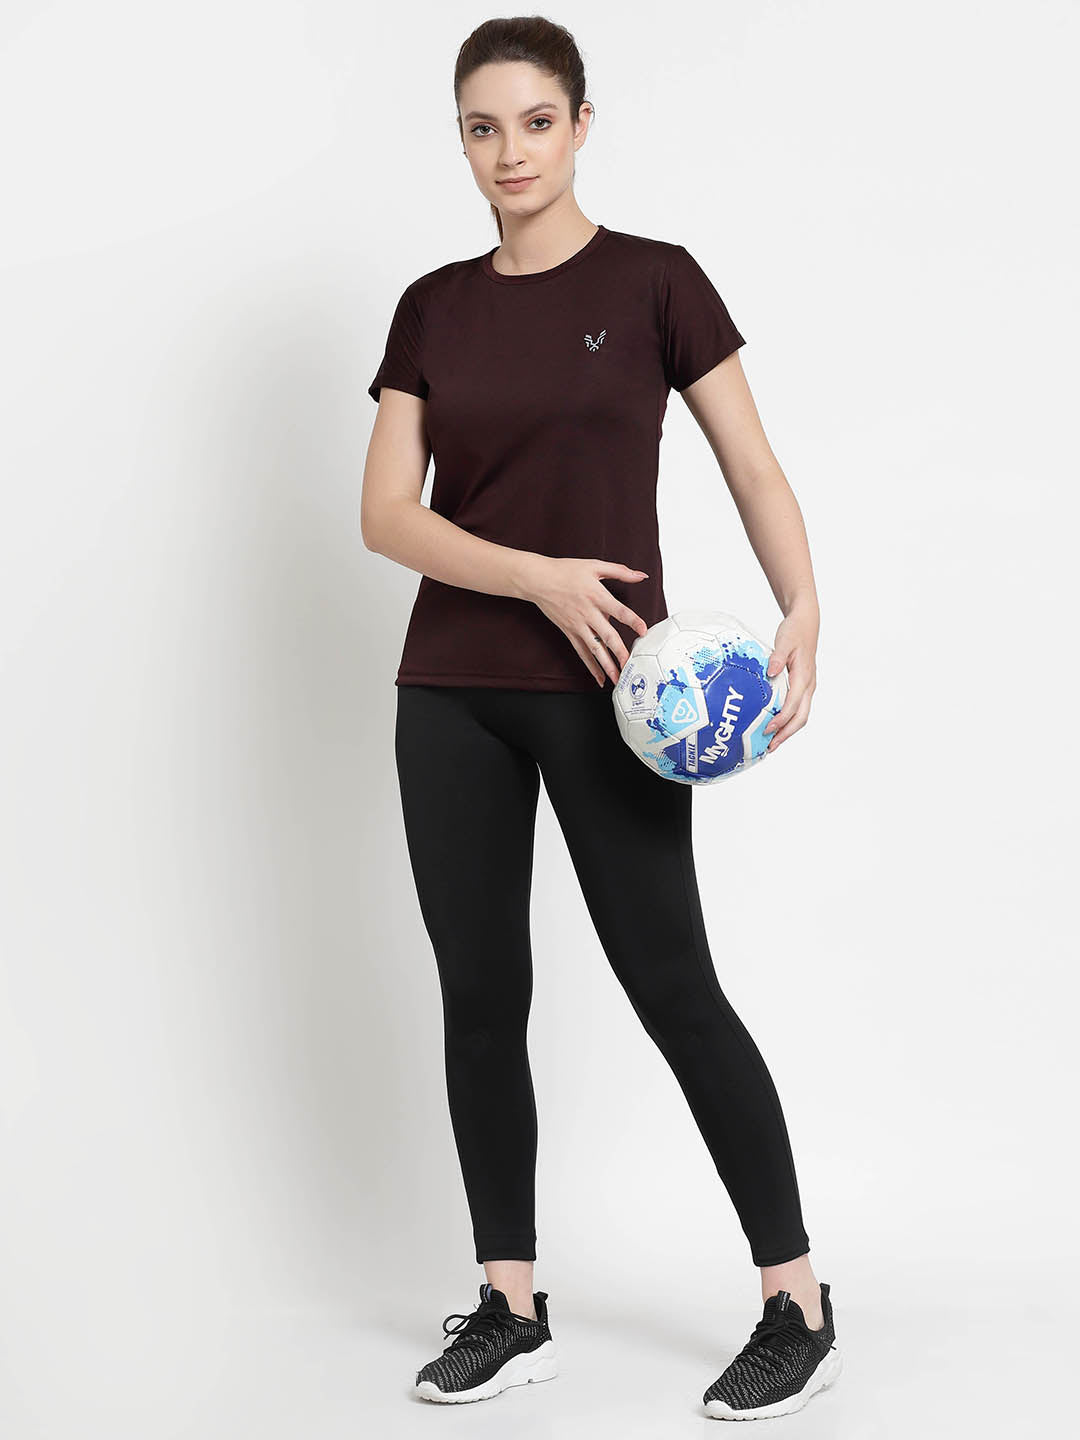 UZARUS Women's Regular Fit Sports Gym T-Shirt